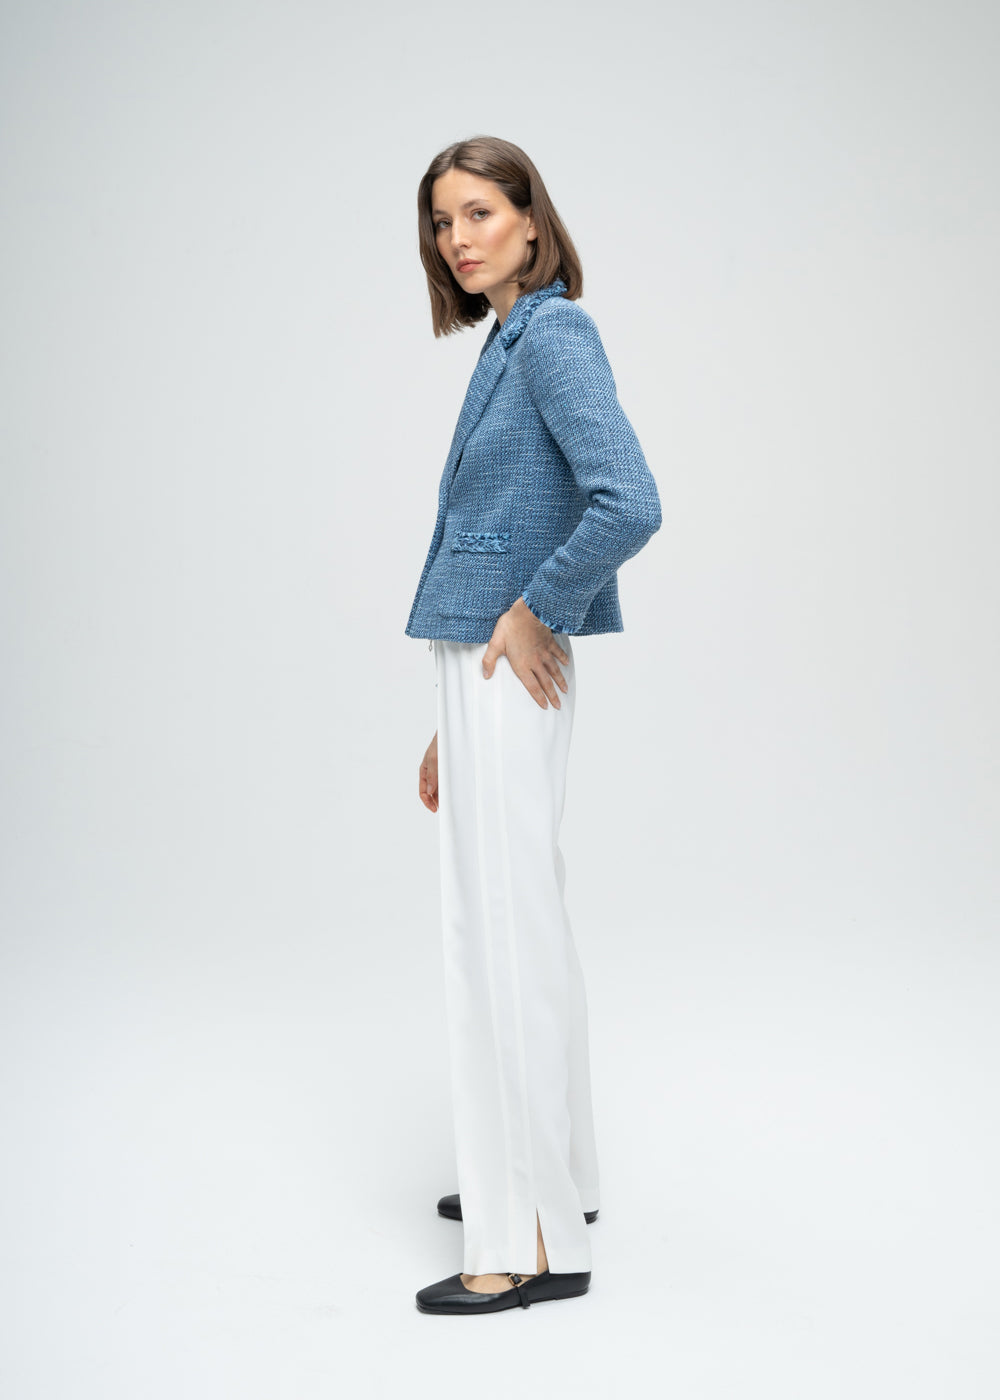 Pantalon blanc large avec bandes latérales effet streetwear et fentes latérales